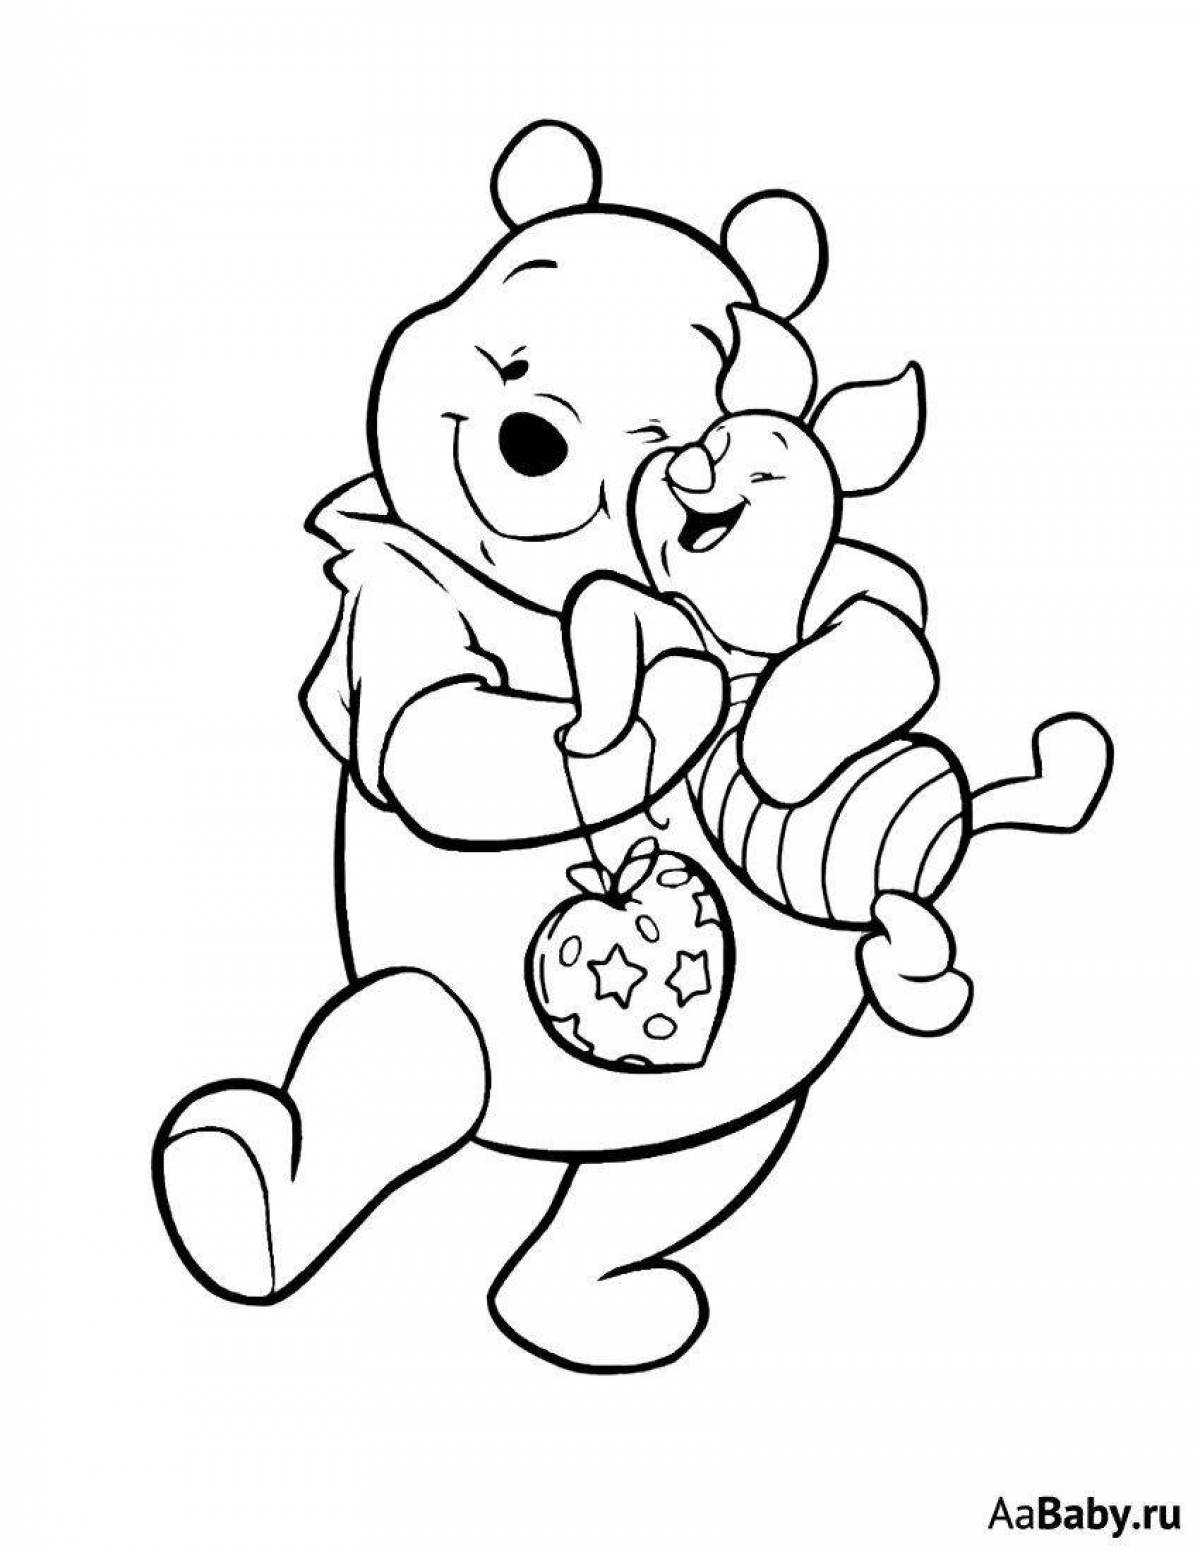 Charming coloring soyuzcartoon winnie the pooh